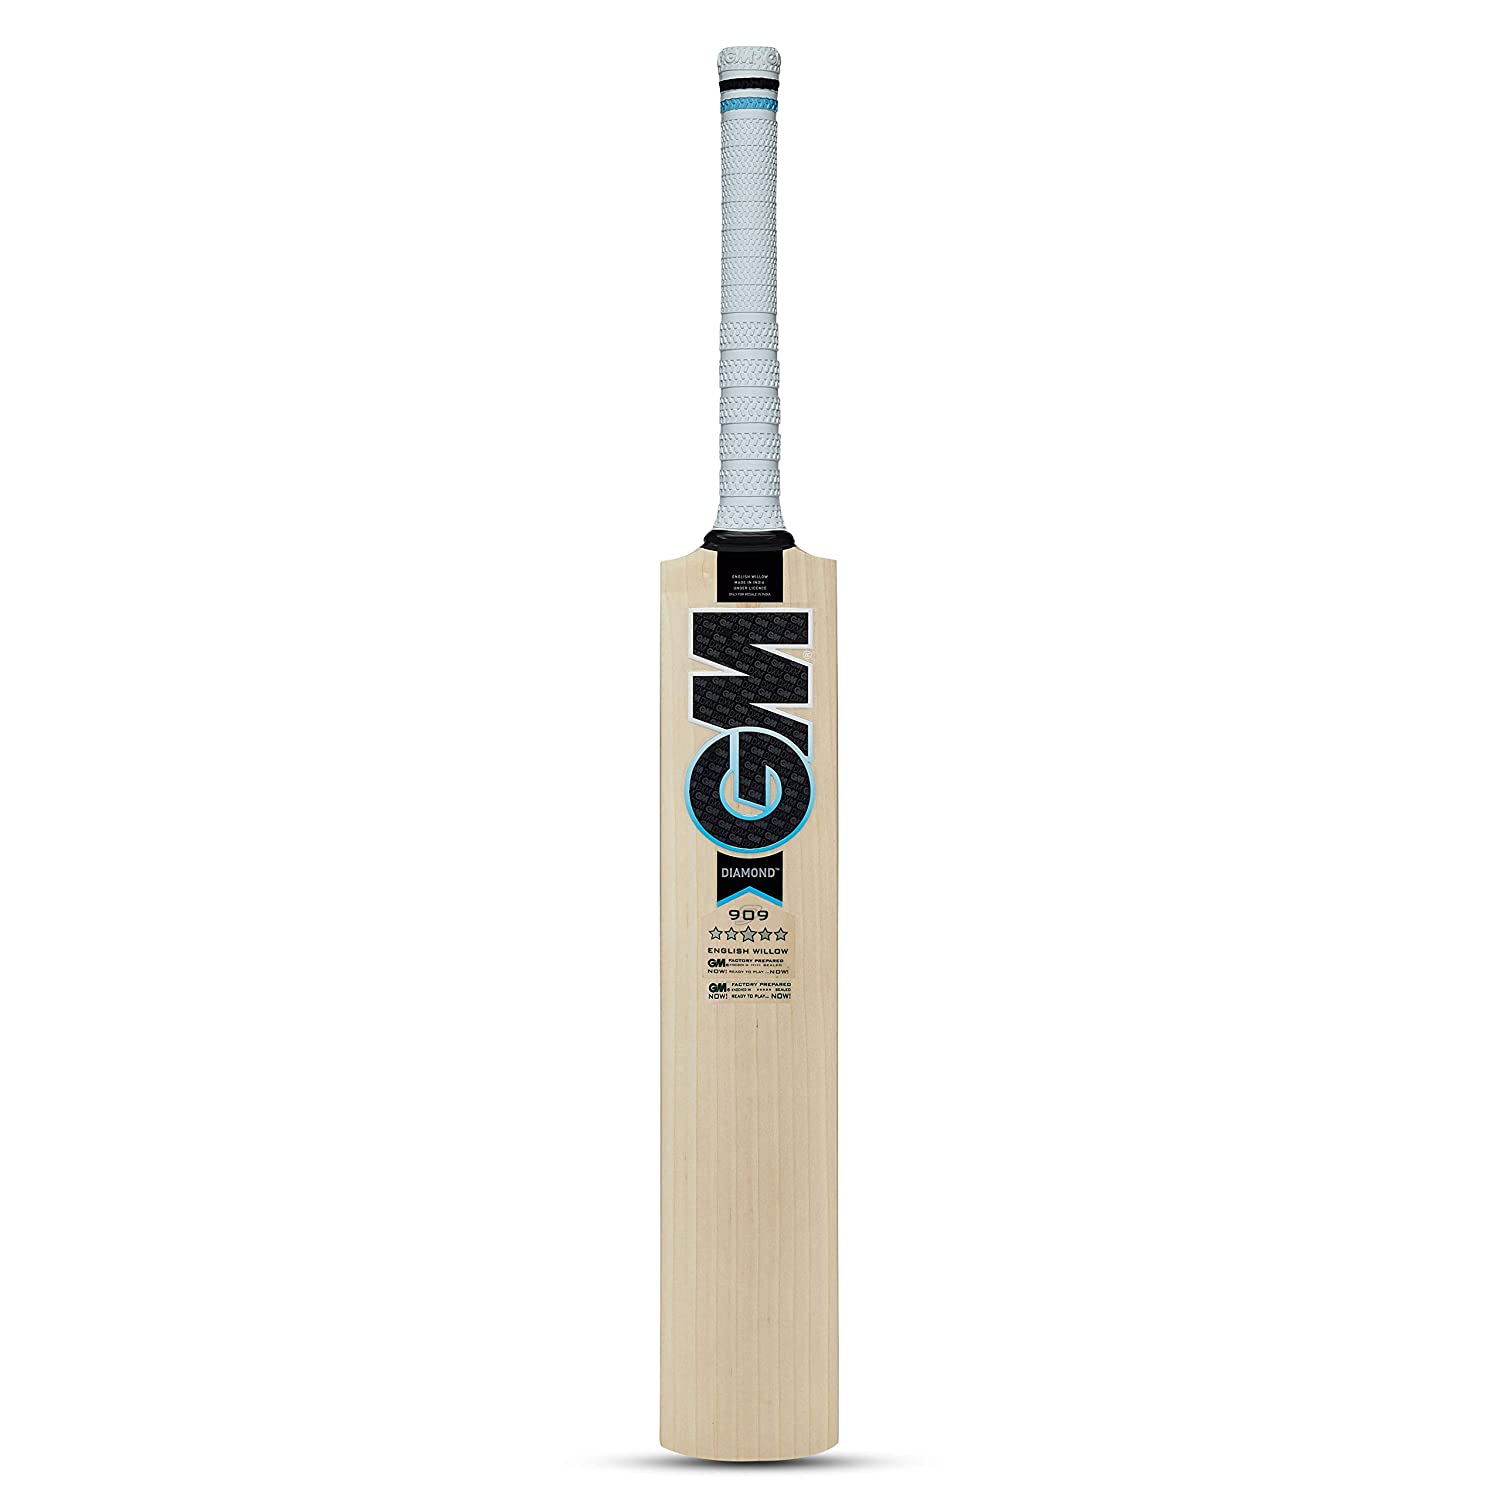 GM Diamond 909 English Willow Cricket Bat - Best Price online Prokicksports.com